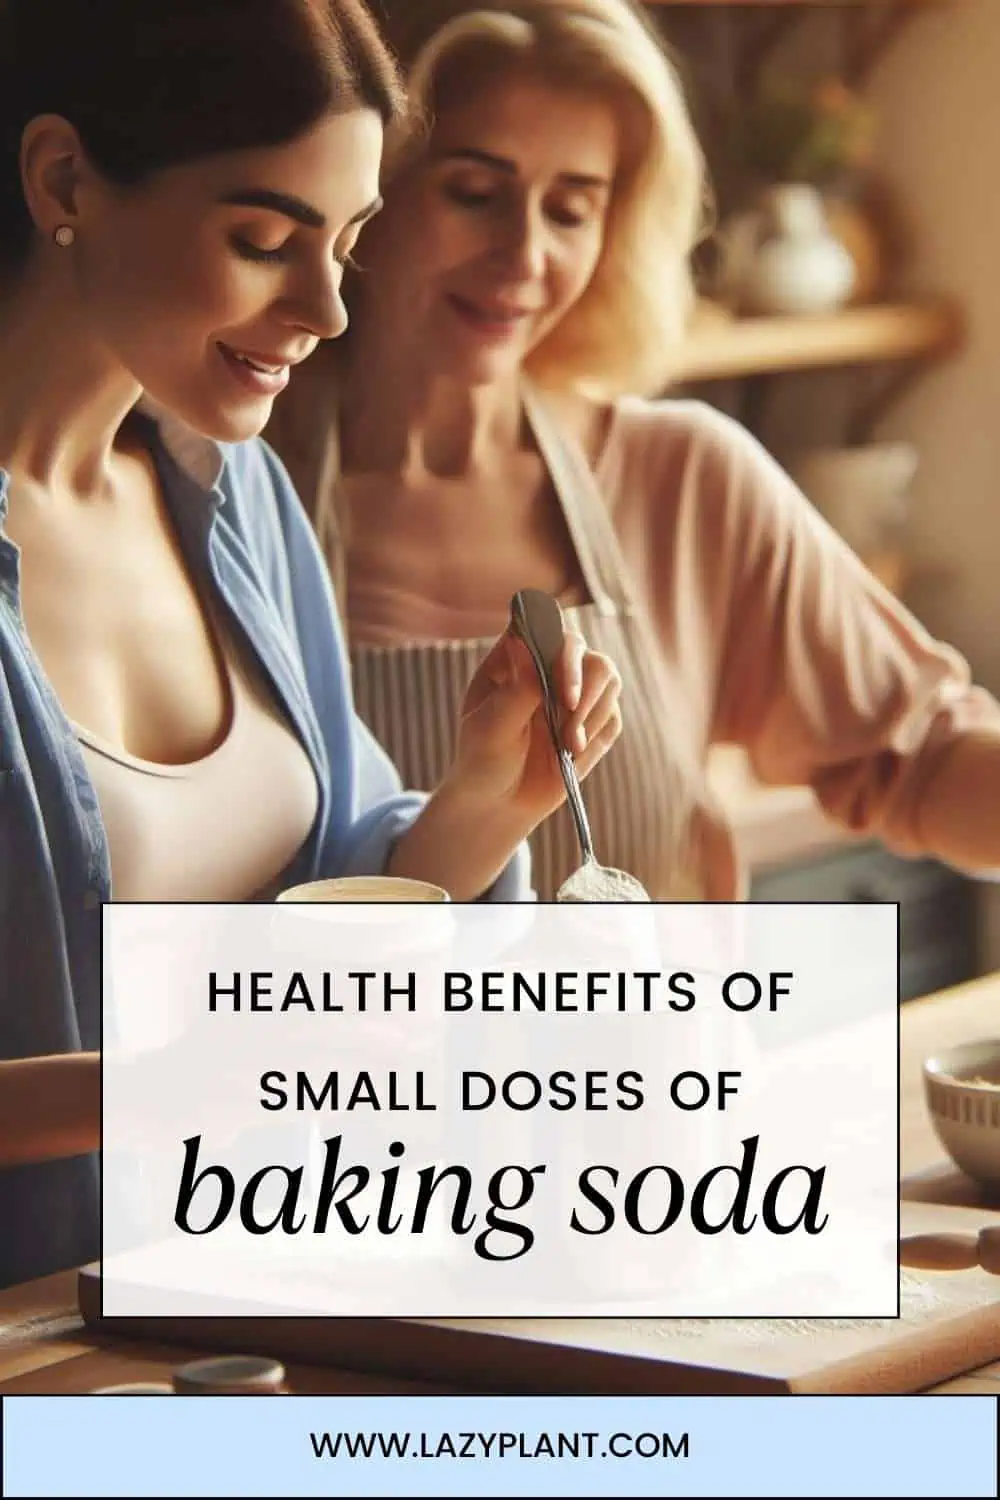 Drinking ¼ tsp of baking soda has many health benefits for you.